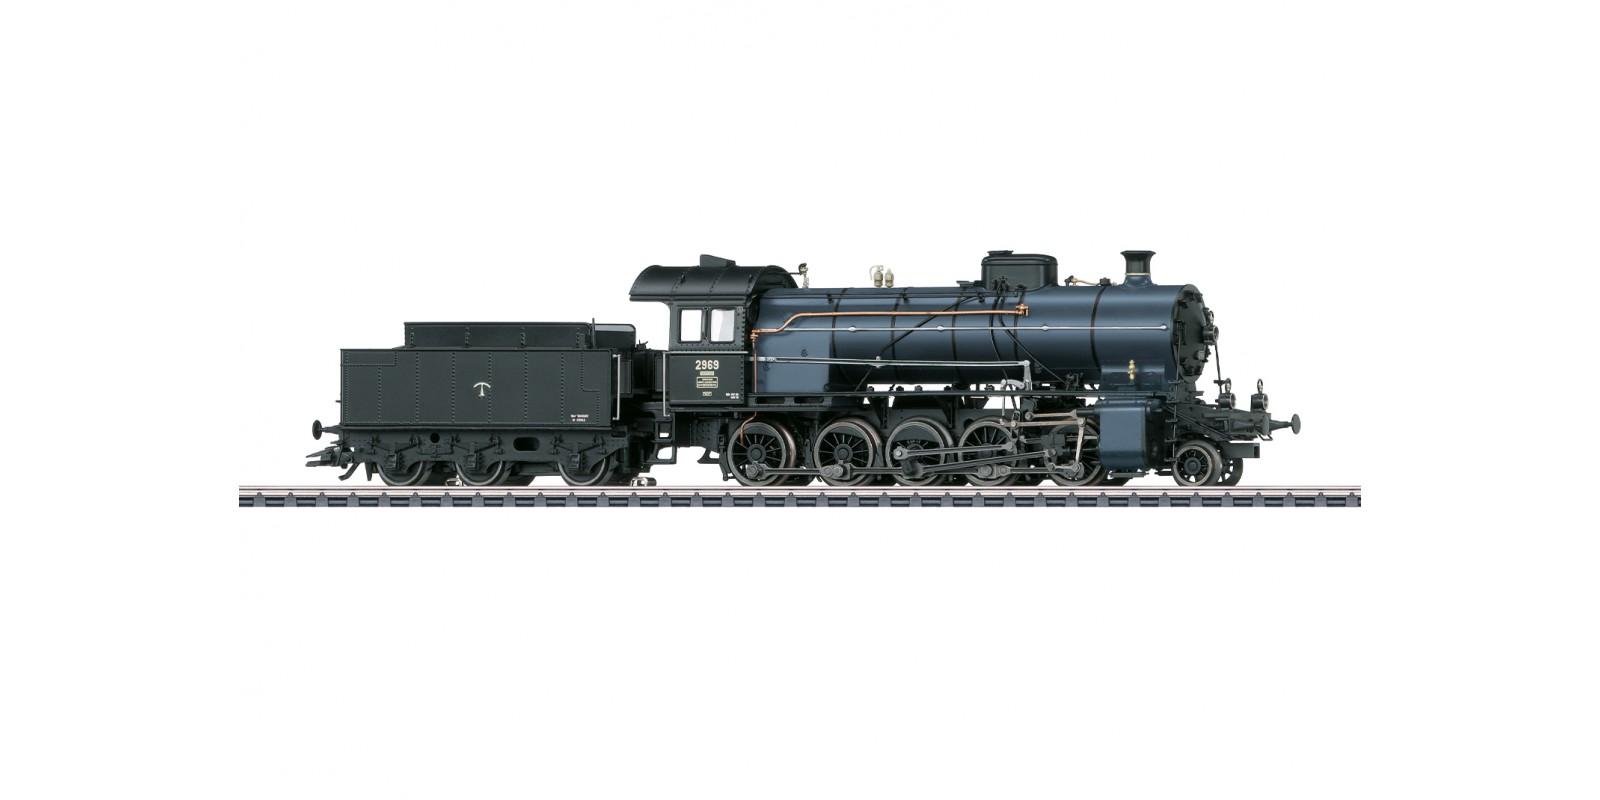 39253 Class C 5/6 Elephant Steam Locomotive with a Tender